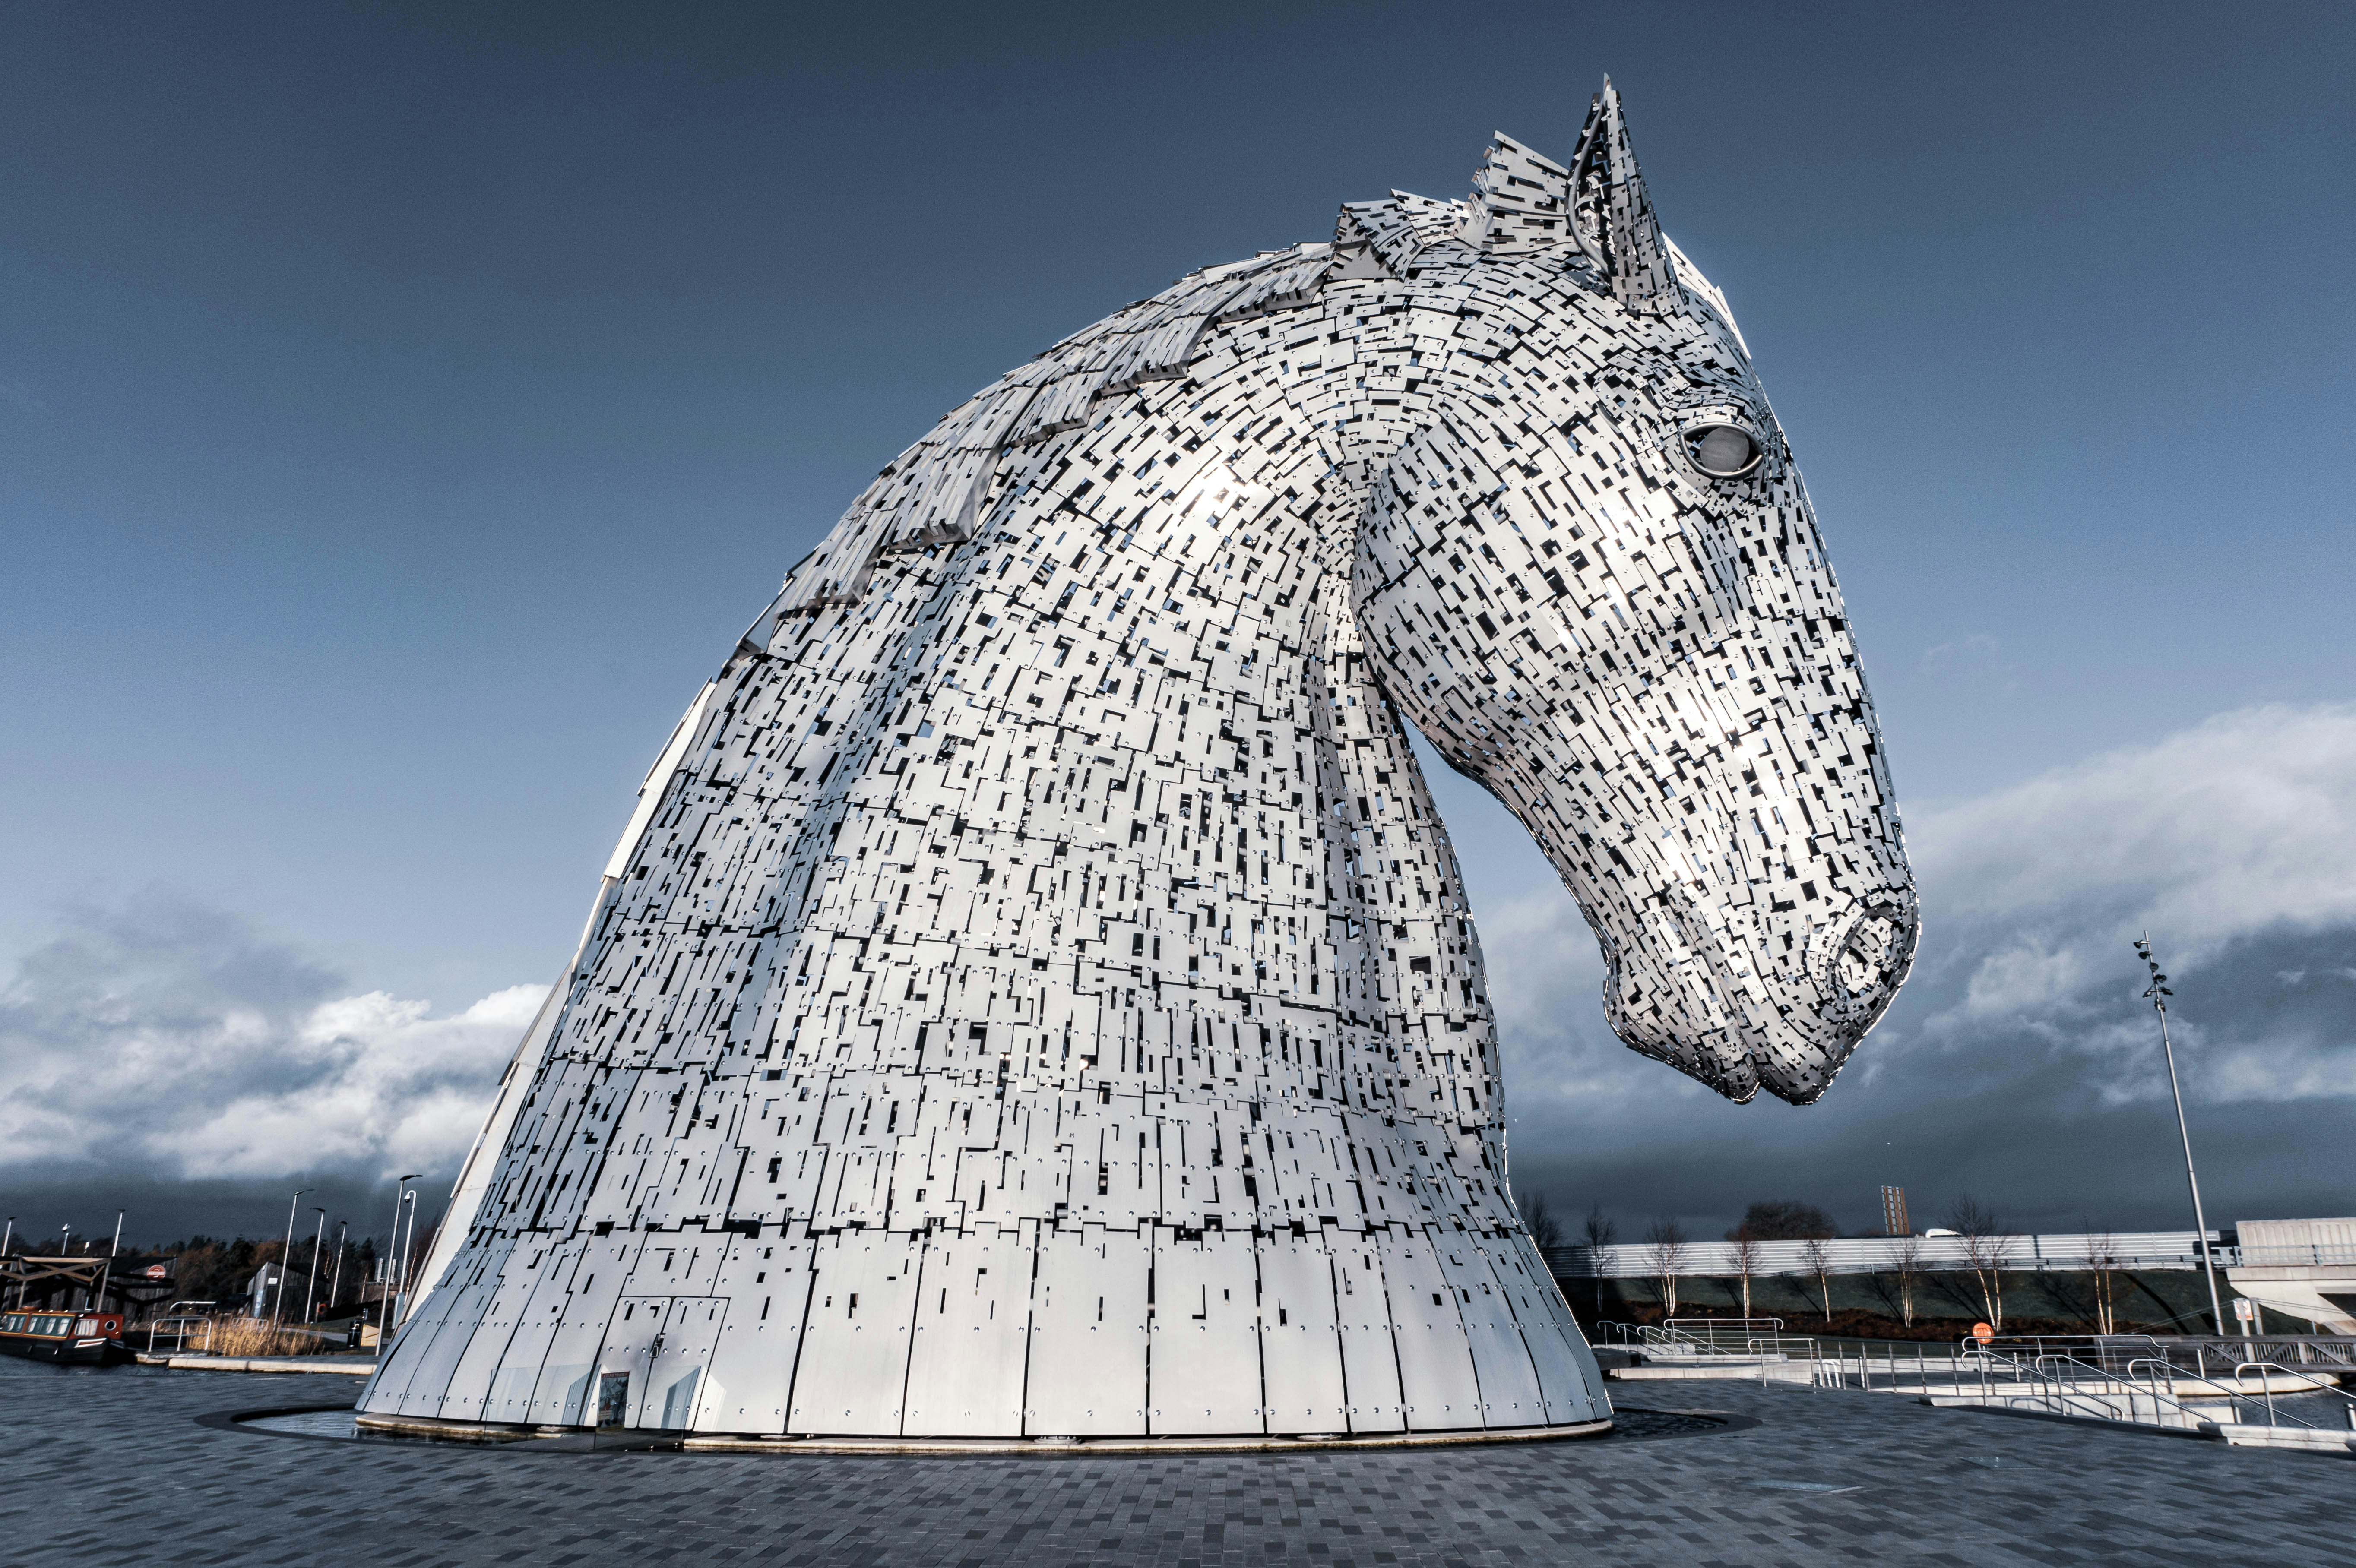 white horse head statue